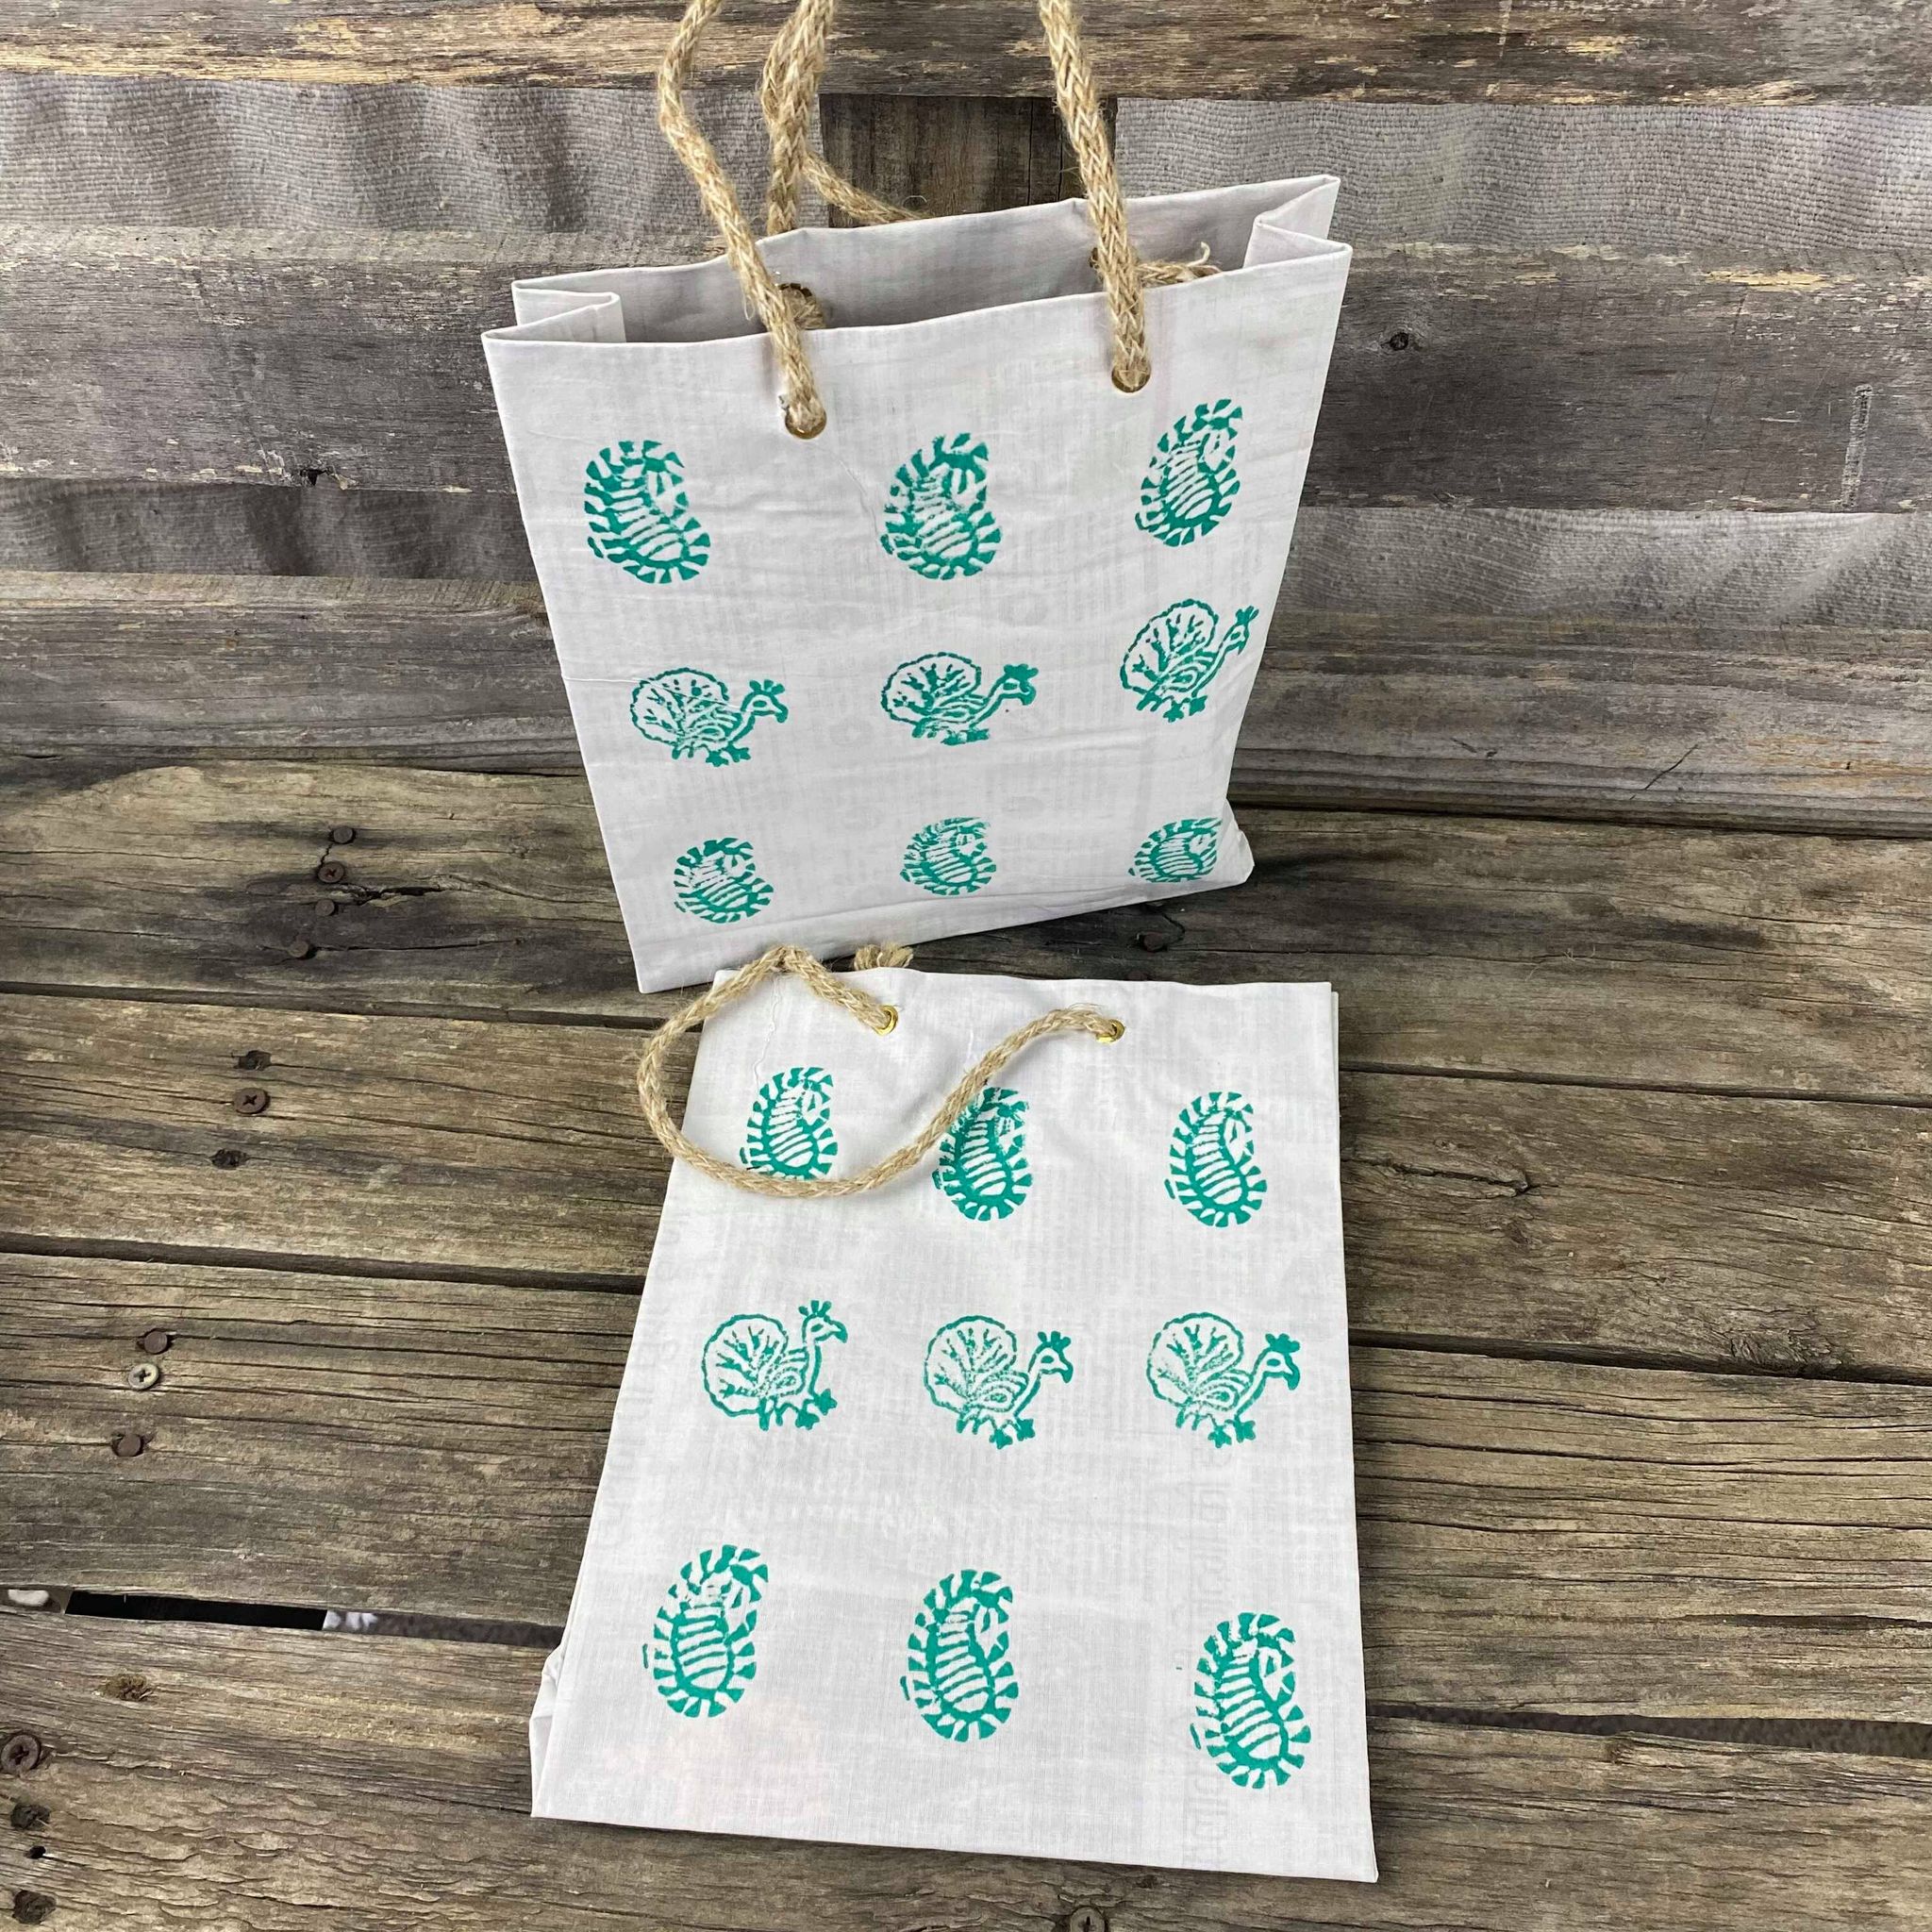 Fair Trade Small Gift Bags